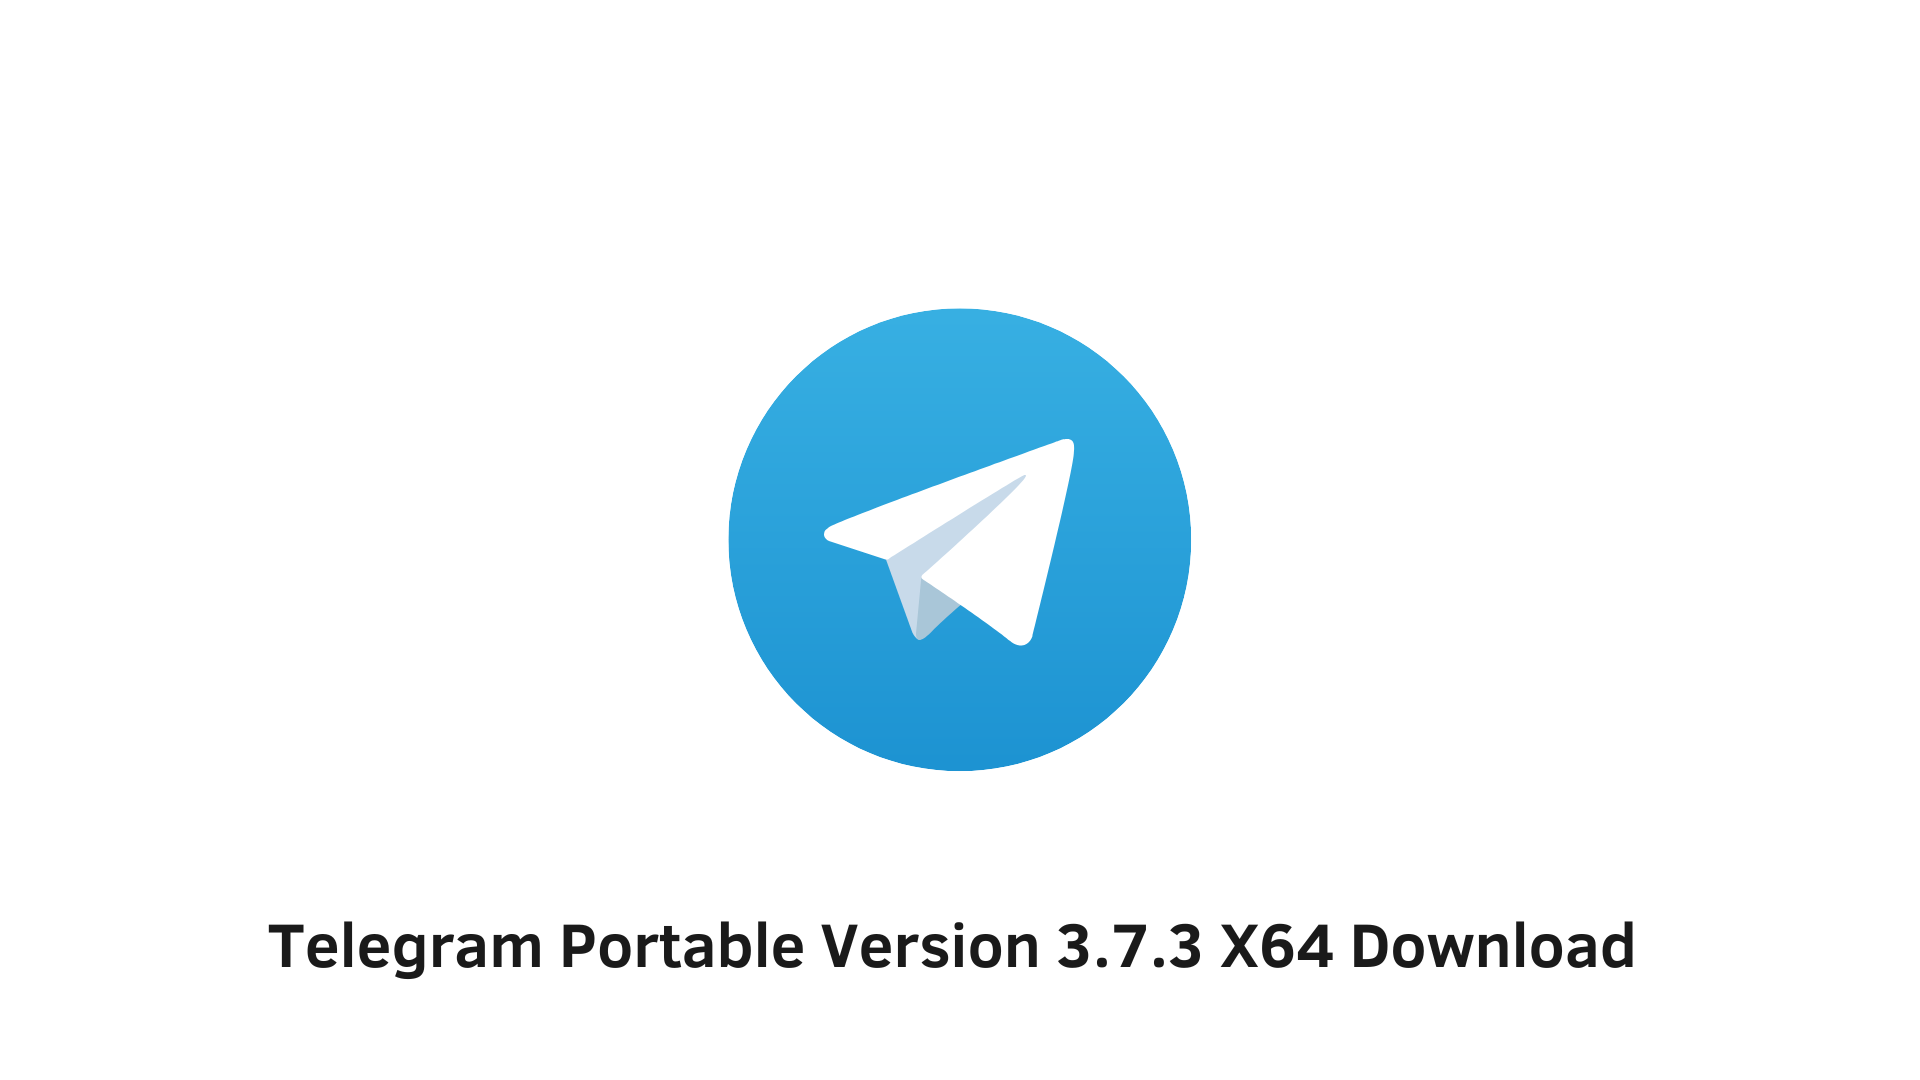 Портативный телеграм. Телеграмм. Телеграмм desktop. Telegram desktop download. Картинка телеграмм.